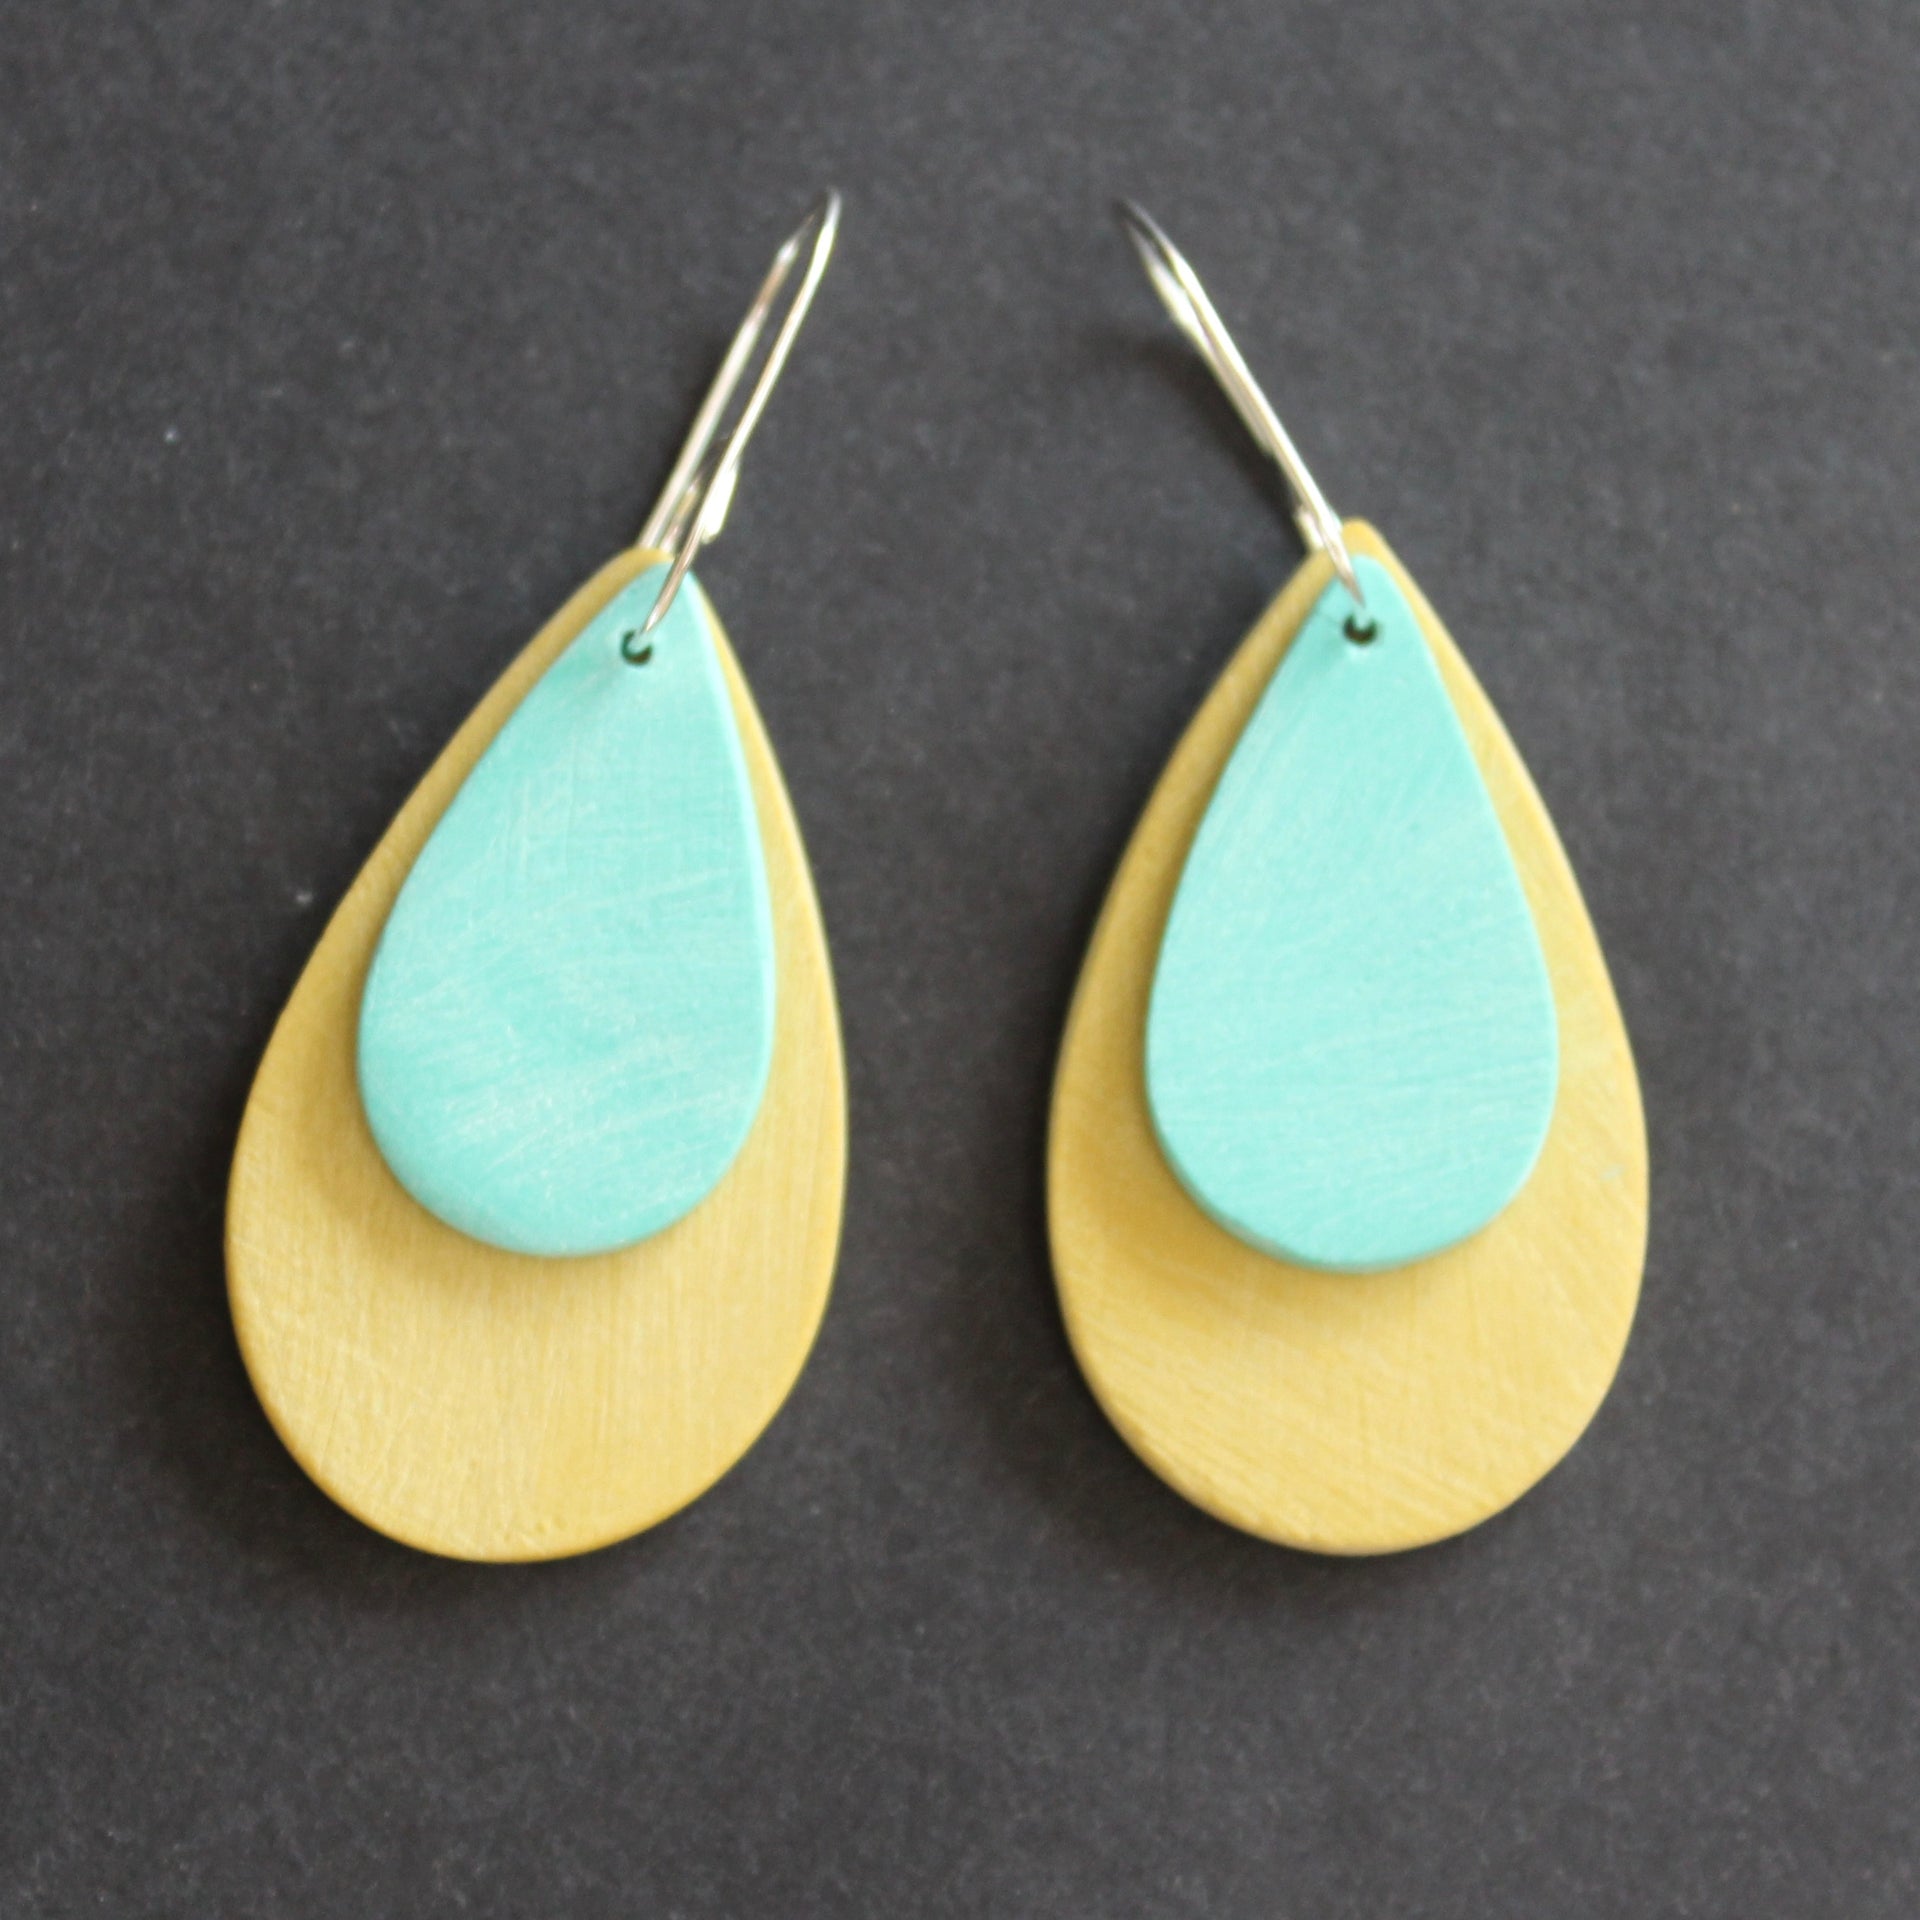 Clare Lloyd drop earrings in duck egg blue and mustard